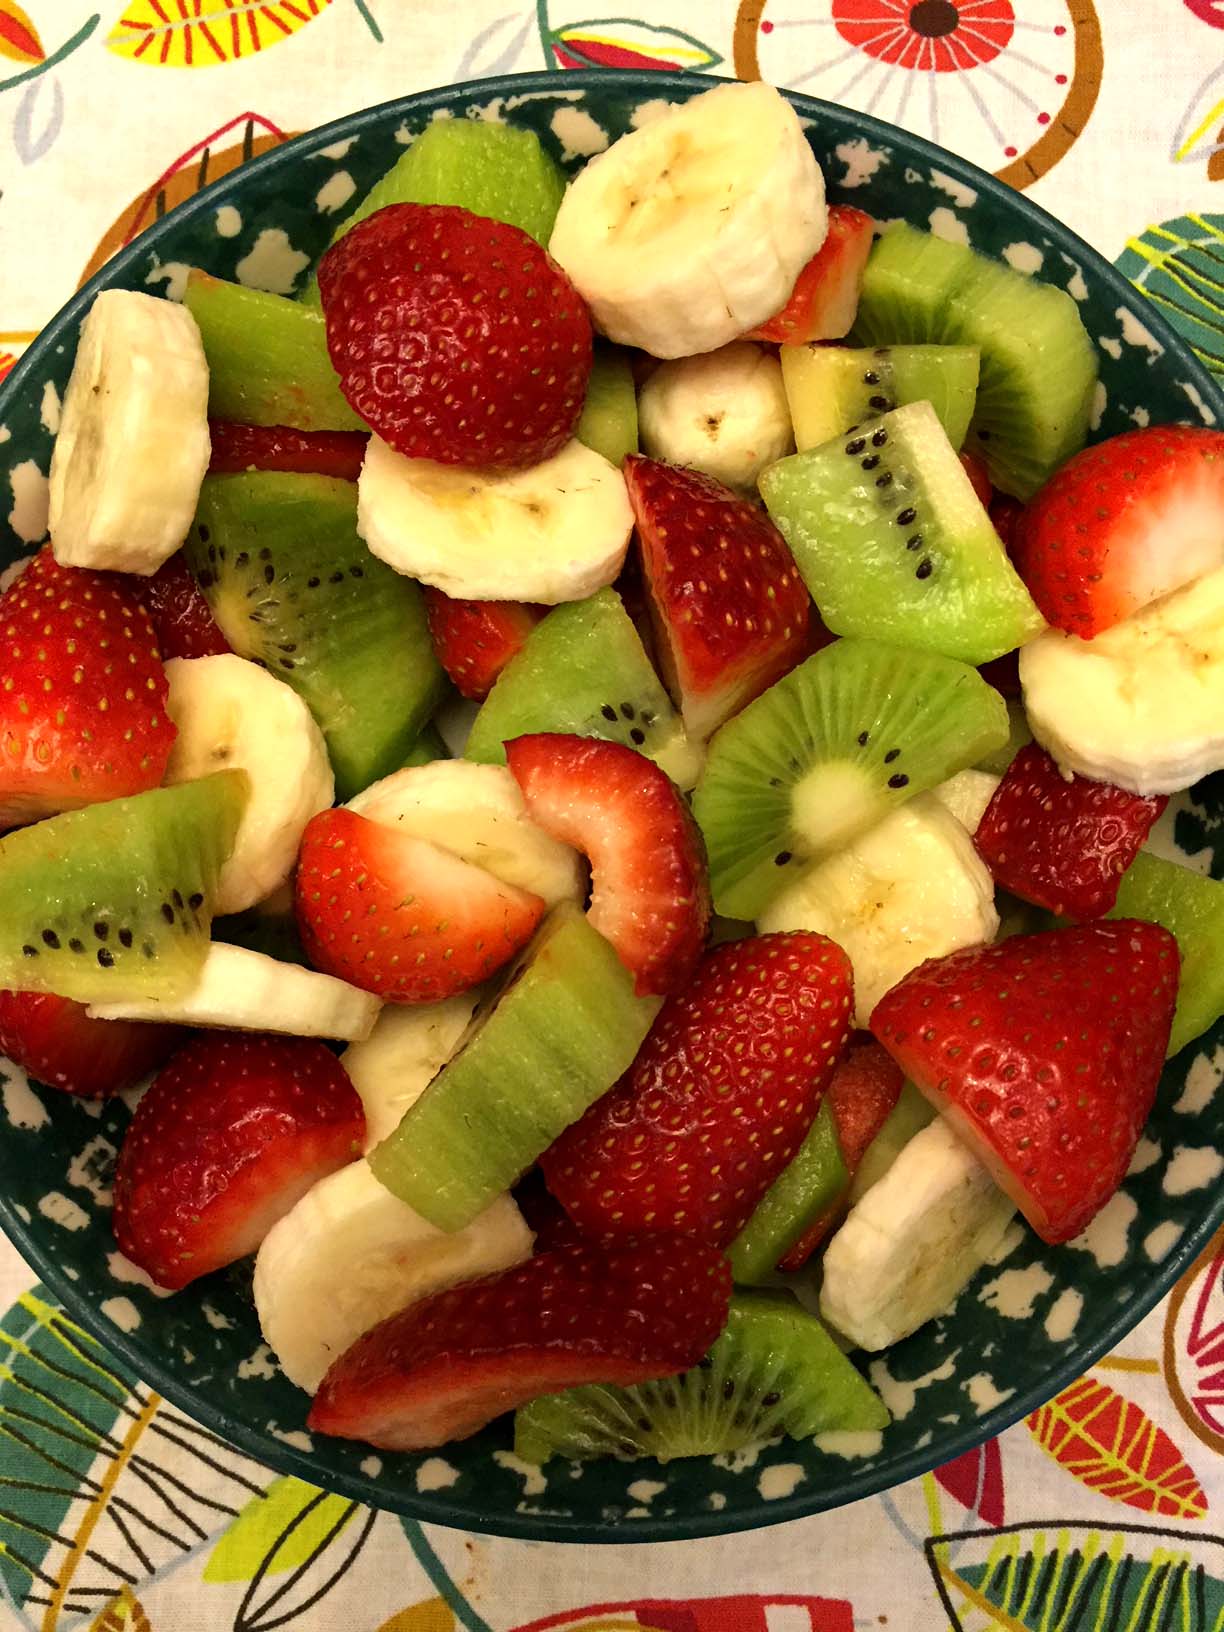 Christmas Fruit Salad With Strawberries, Kiwis and Bananas – Red, Green ...